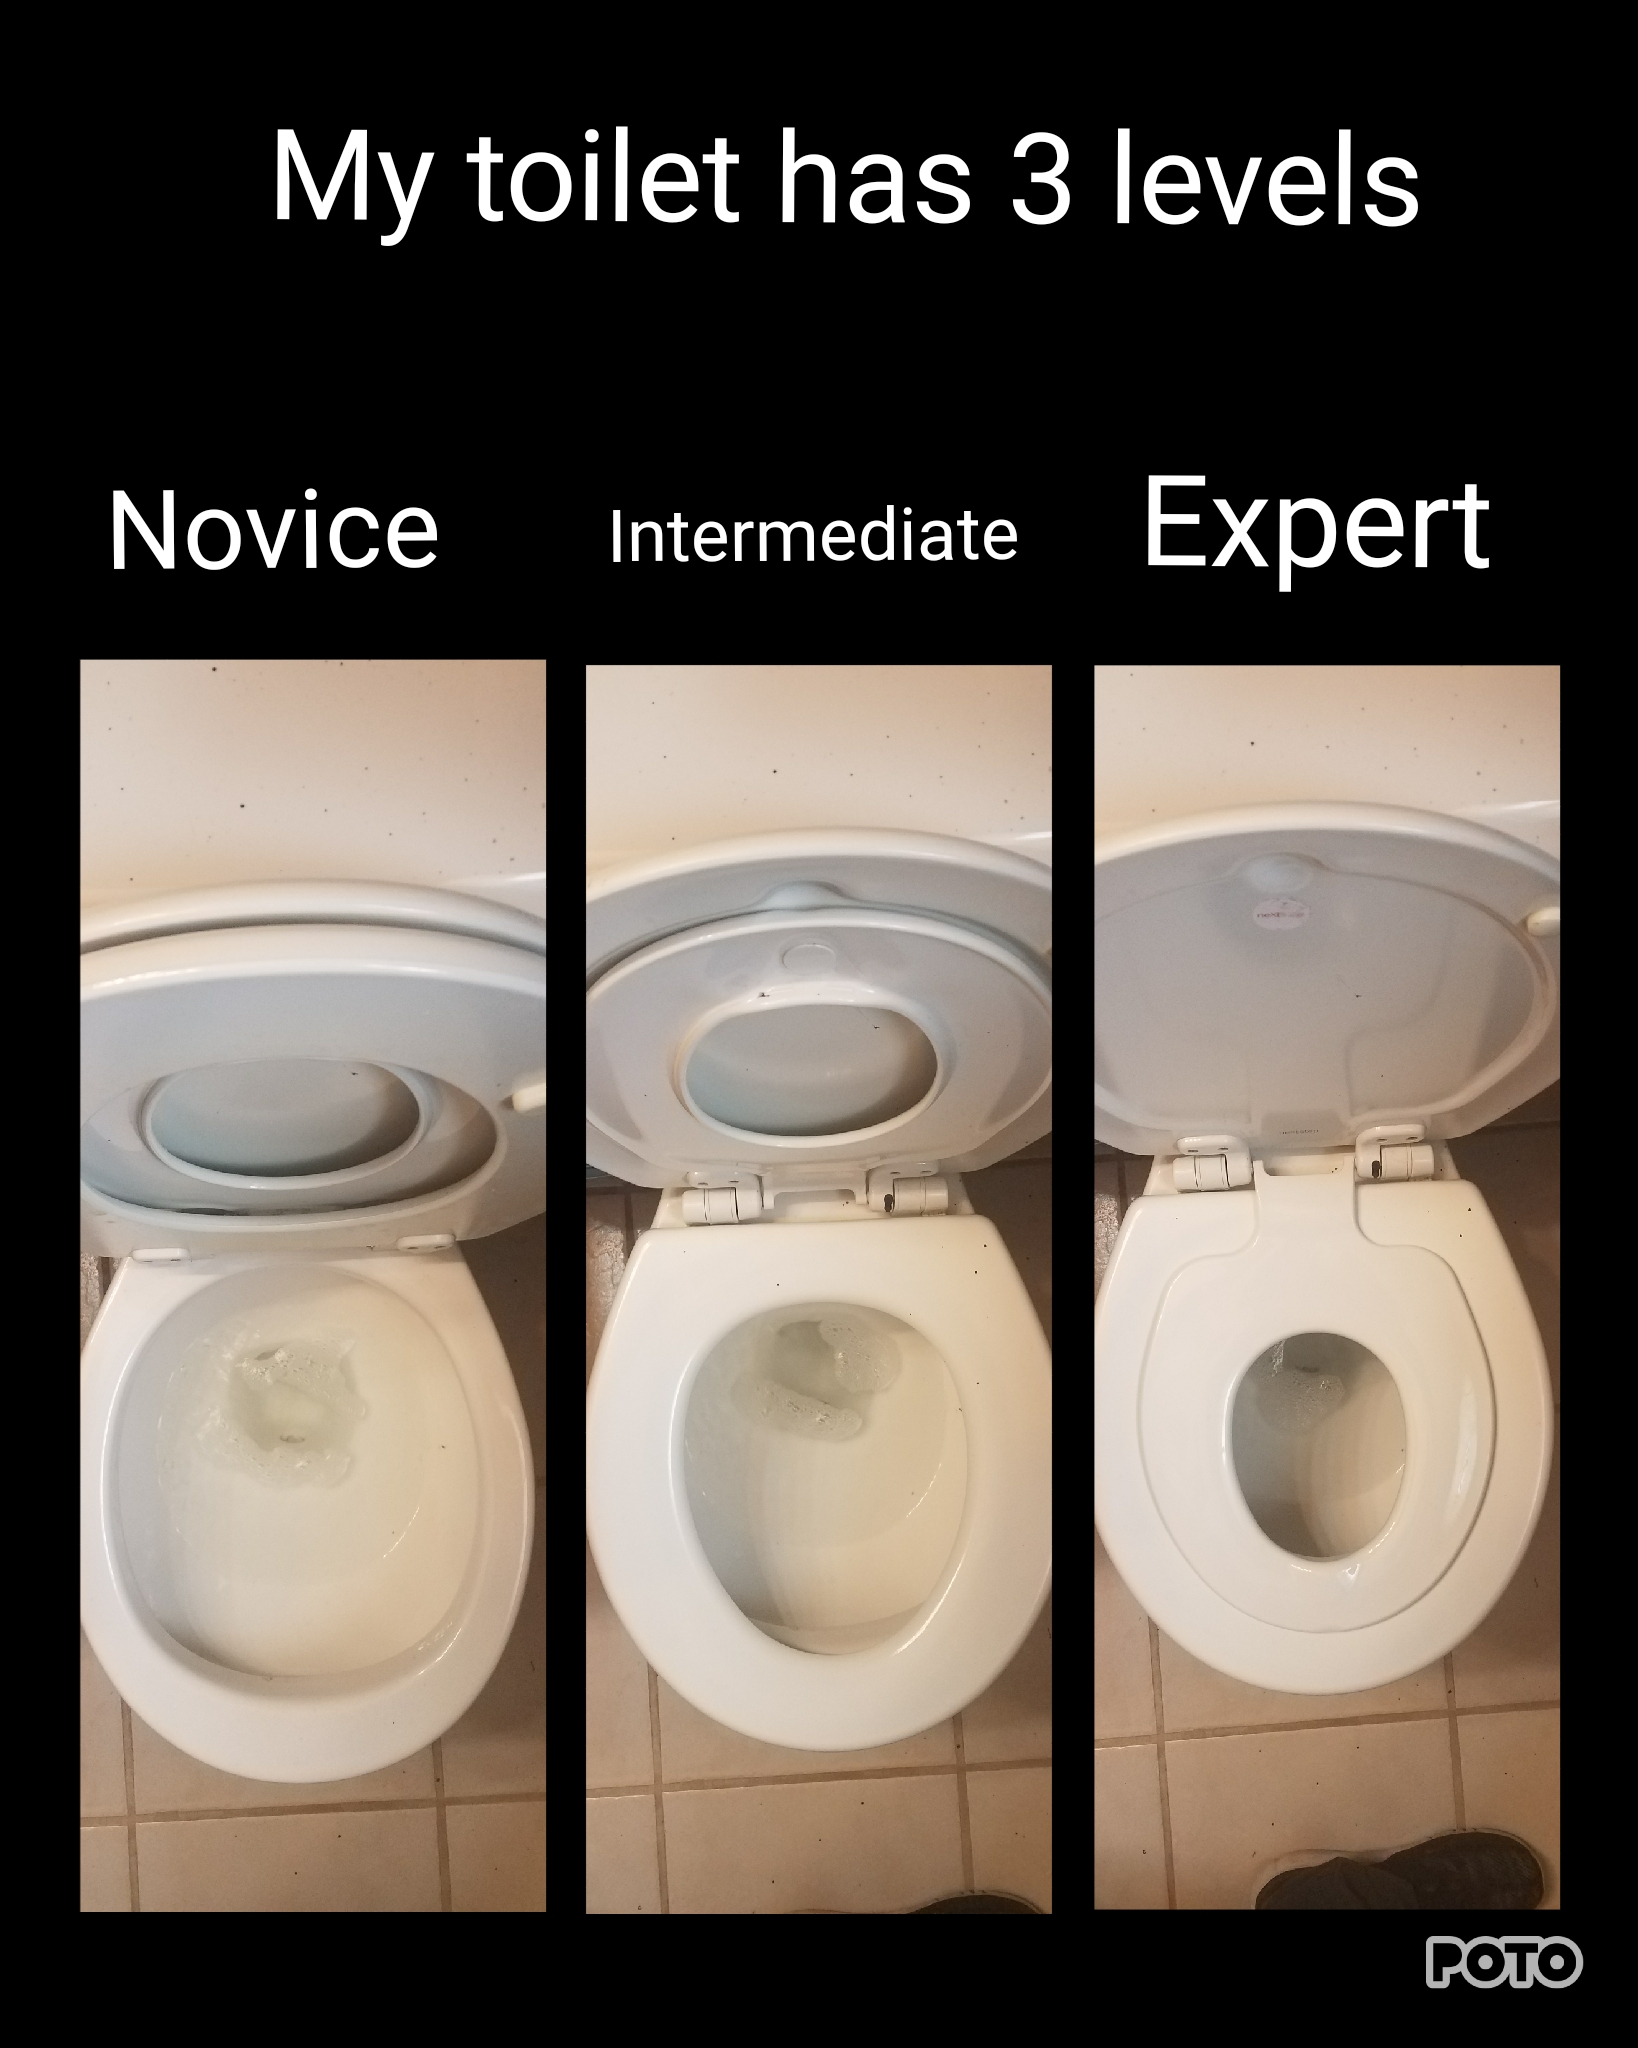 toilet seat - My toilet has 3 levels Novice Intermediate Expert Poto